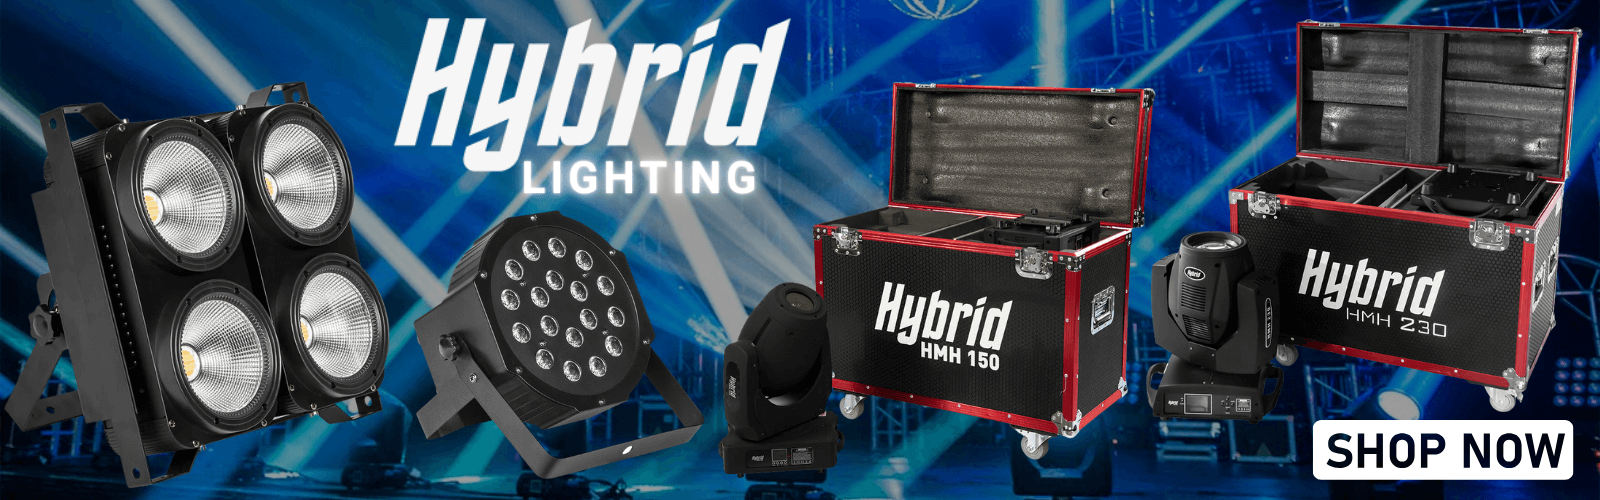 Hybrid_Lighting_1_